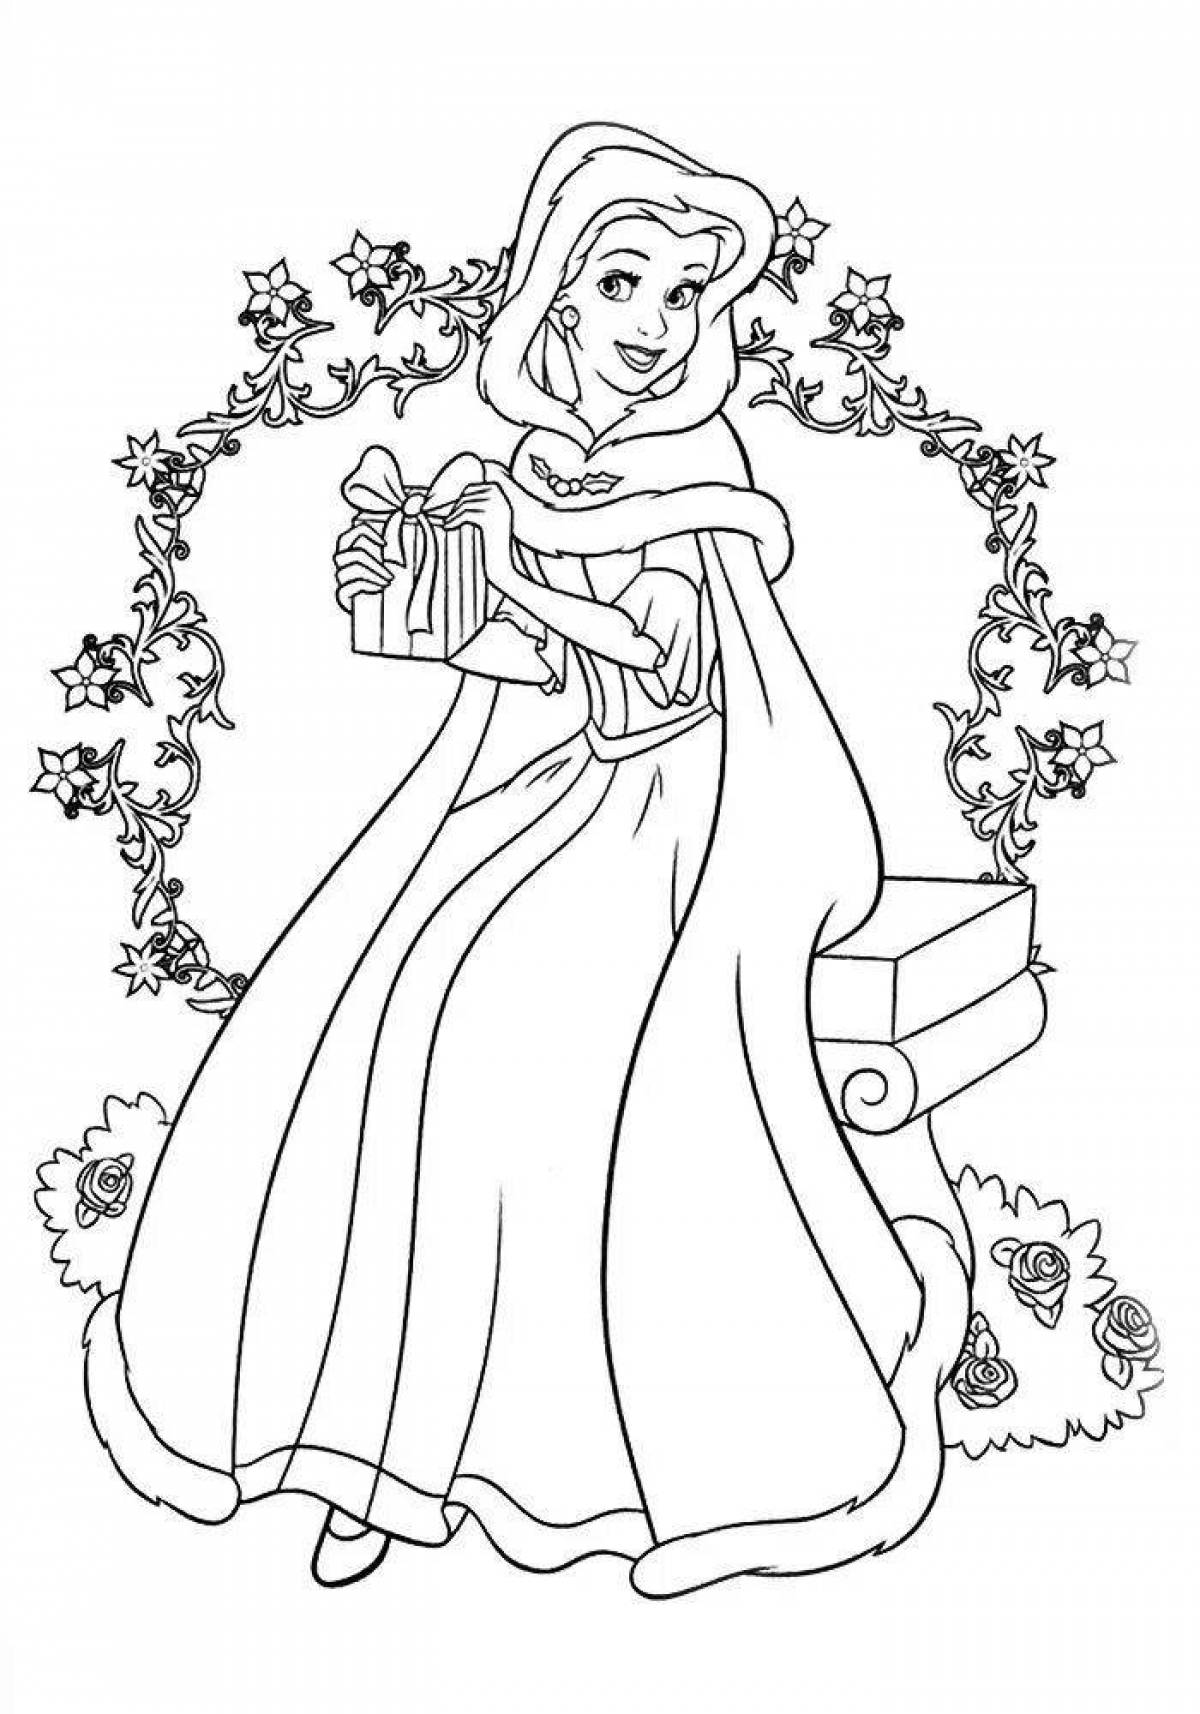 Exquisite disney princess coloring book